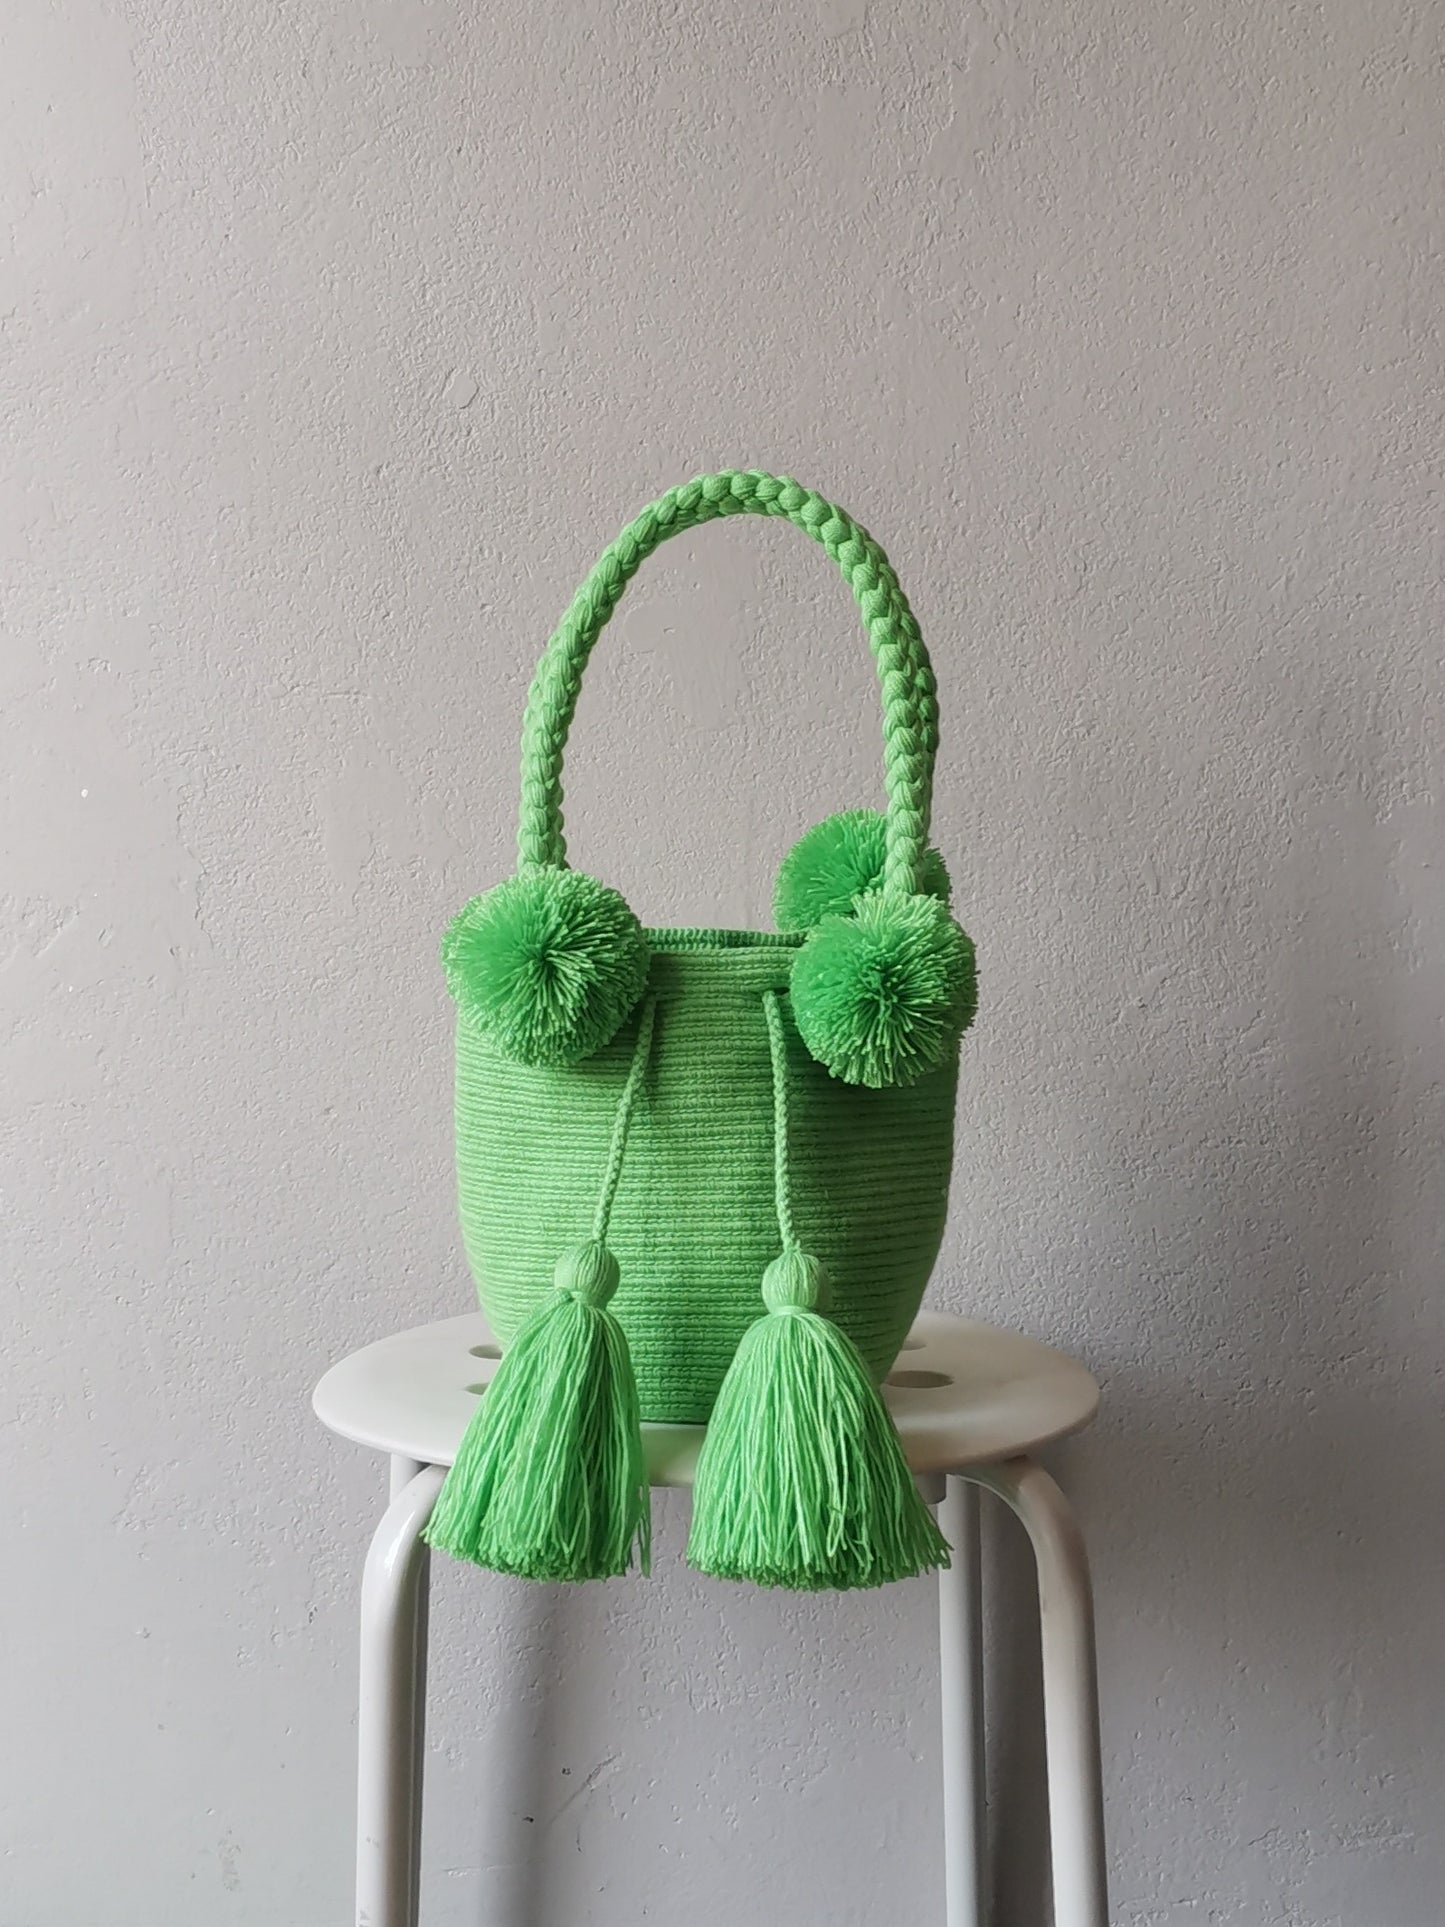 Mochila handbag S in single color light blue green grasshopper